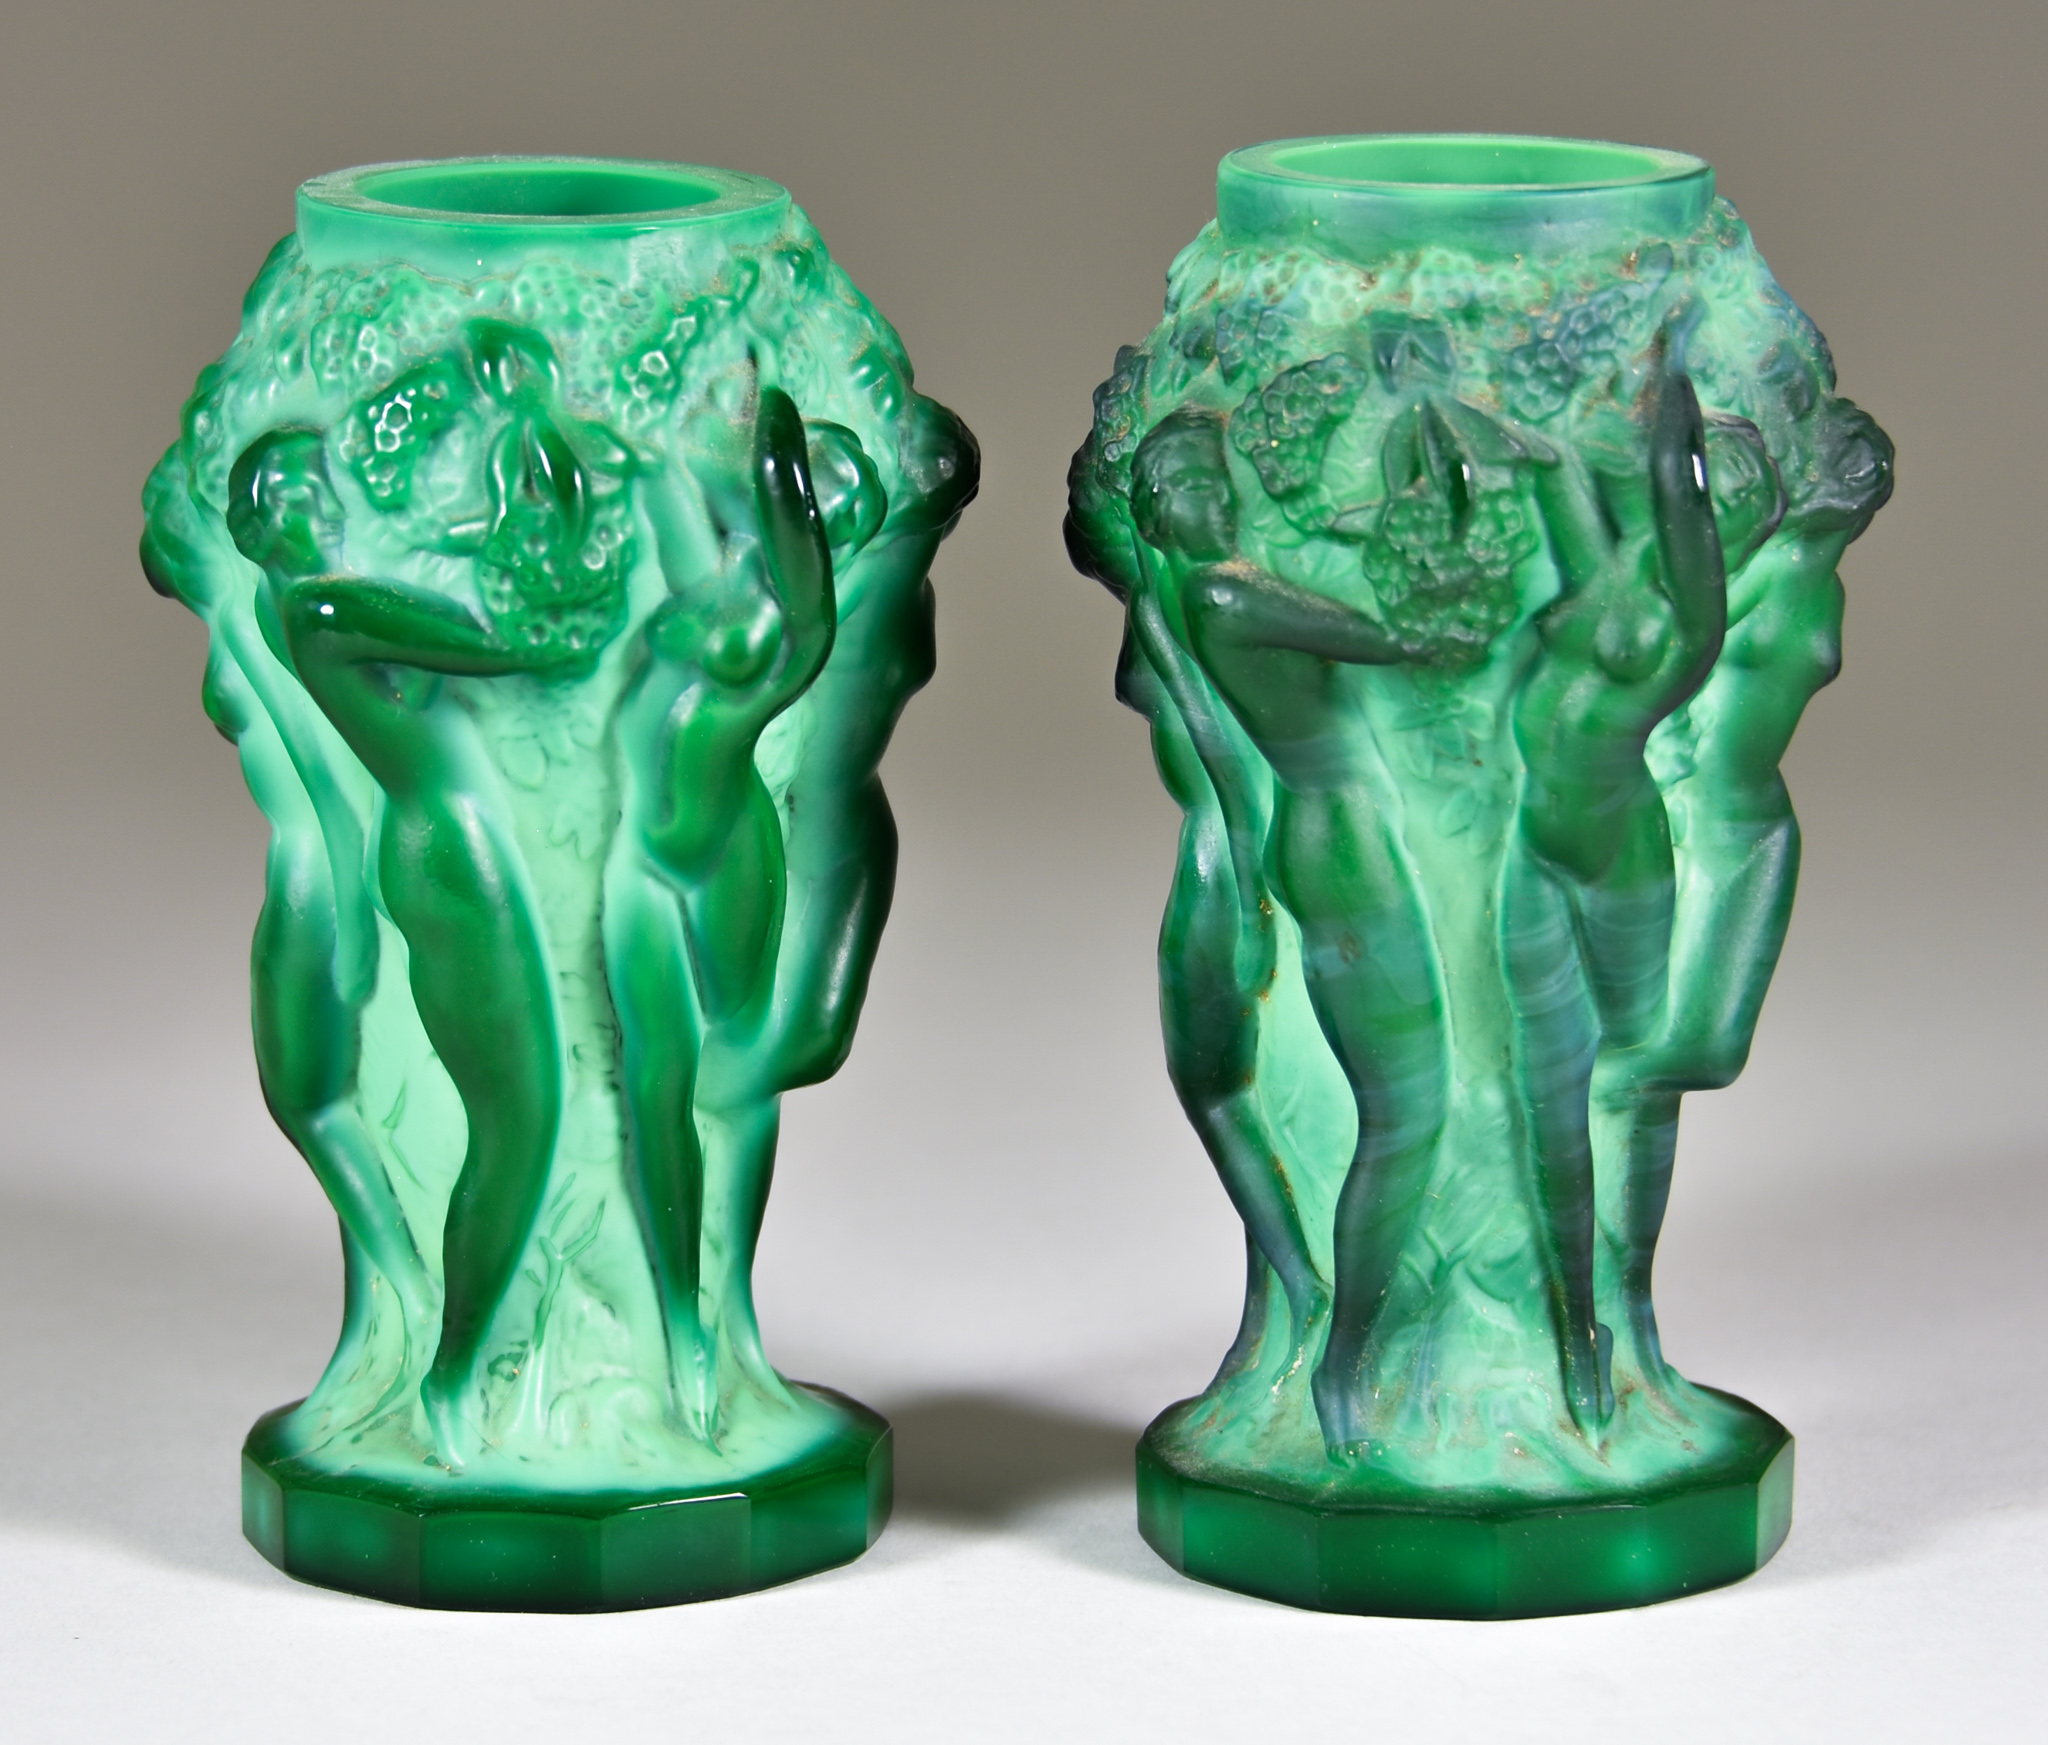 A Pair of Hoffman & Schlevogt "Ingrid" Malachite Glass Vases, 1930s/50s, of dancing nude figures,